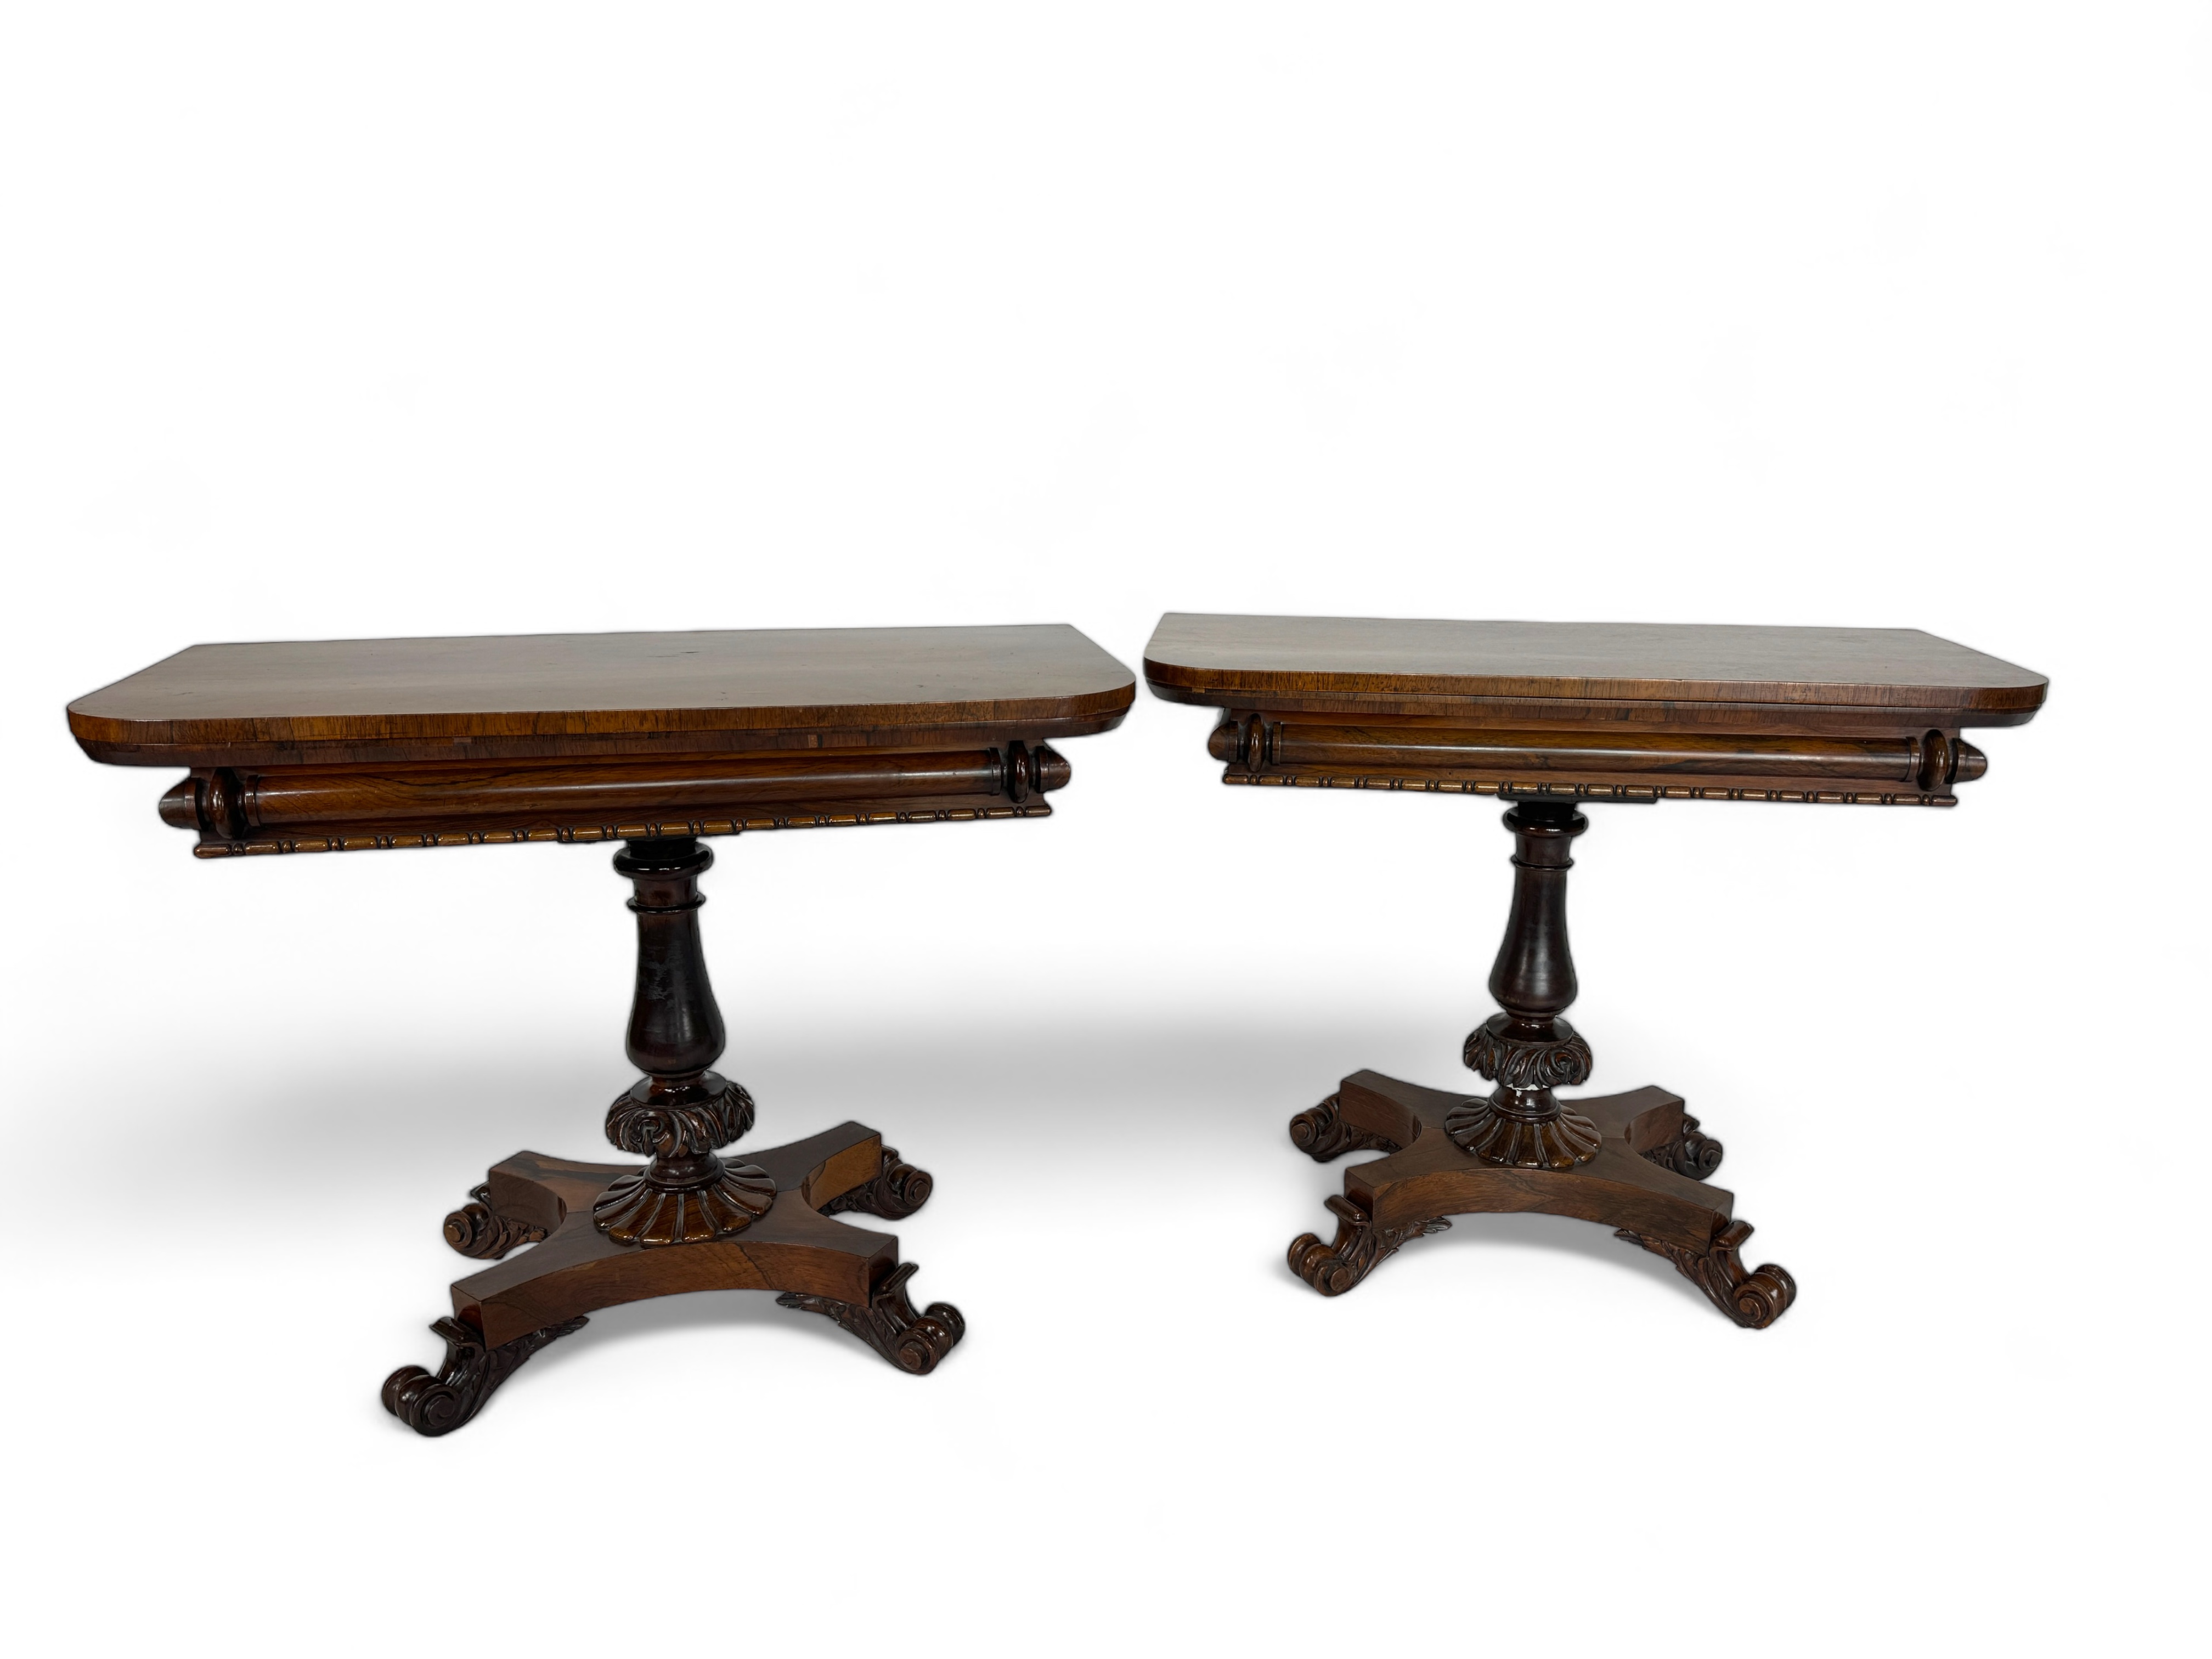 A pair of Regency rosewood carved tea tables